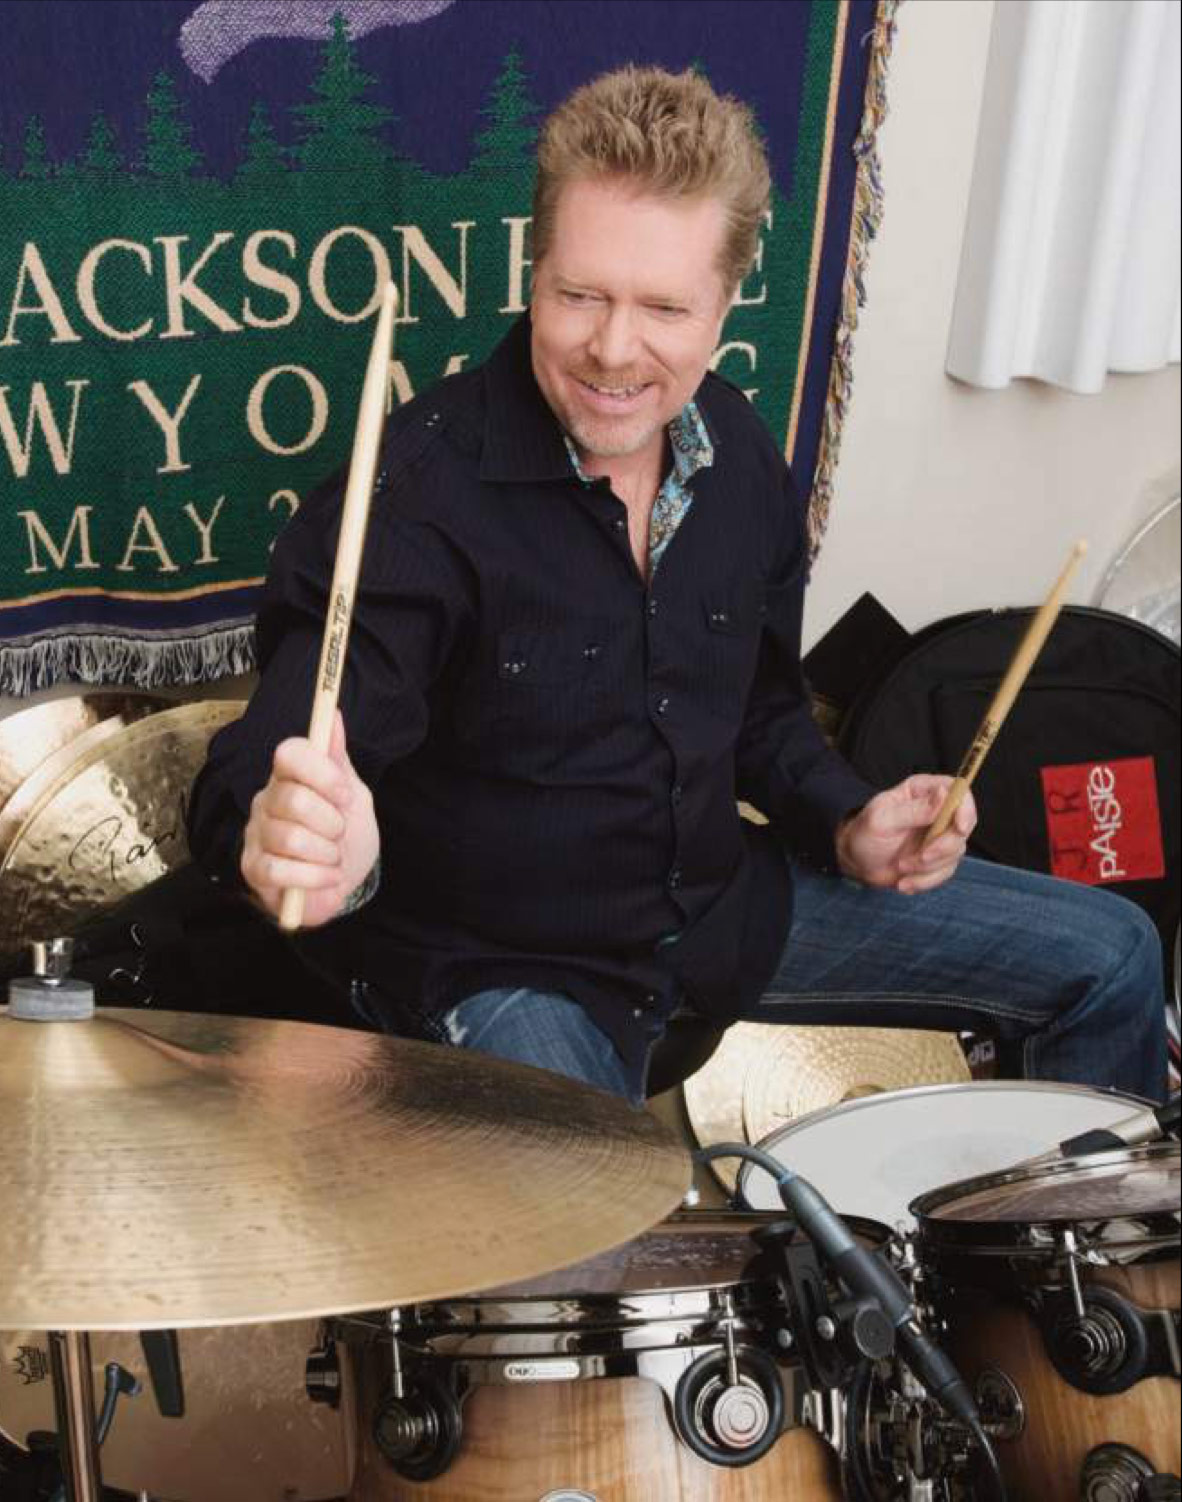 John J.R. Robinson - Drummerworld